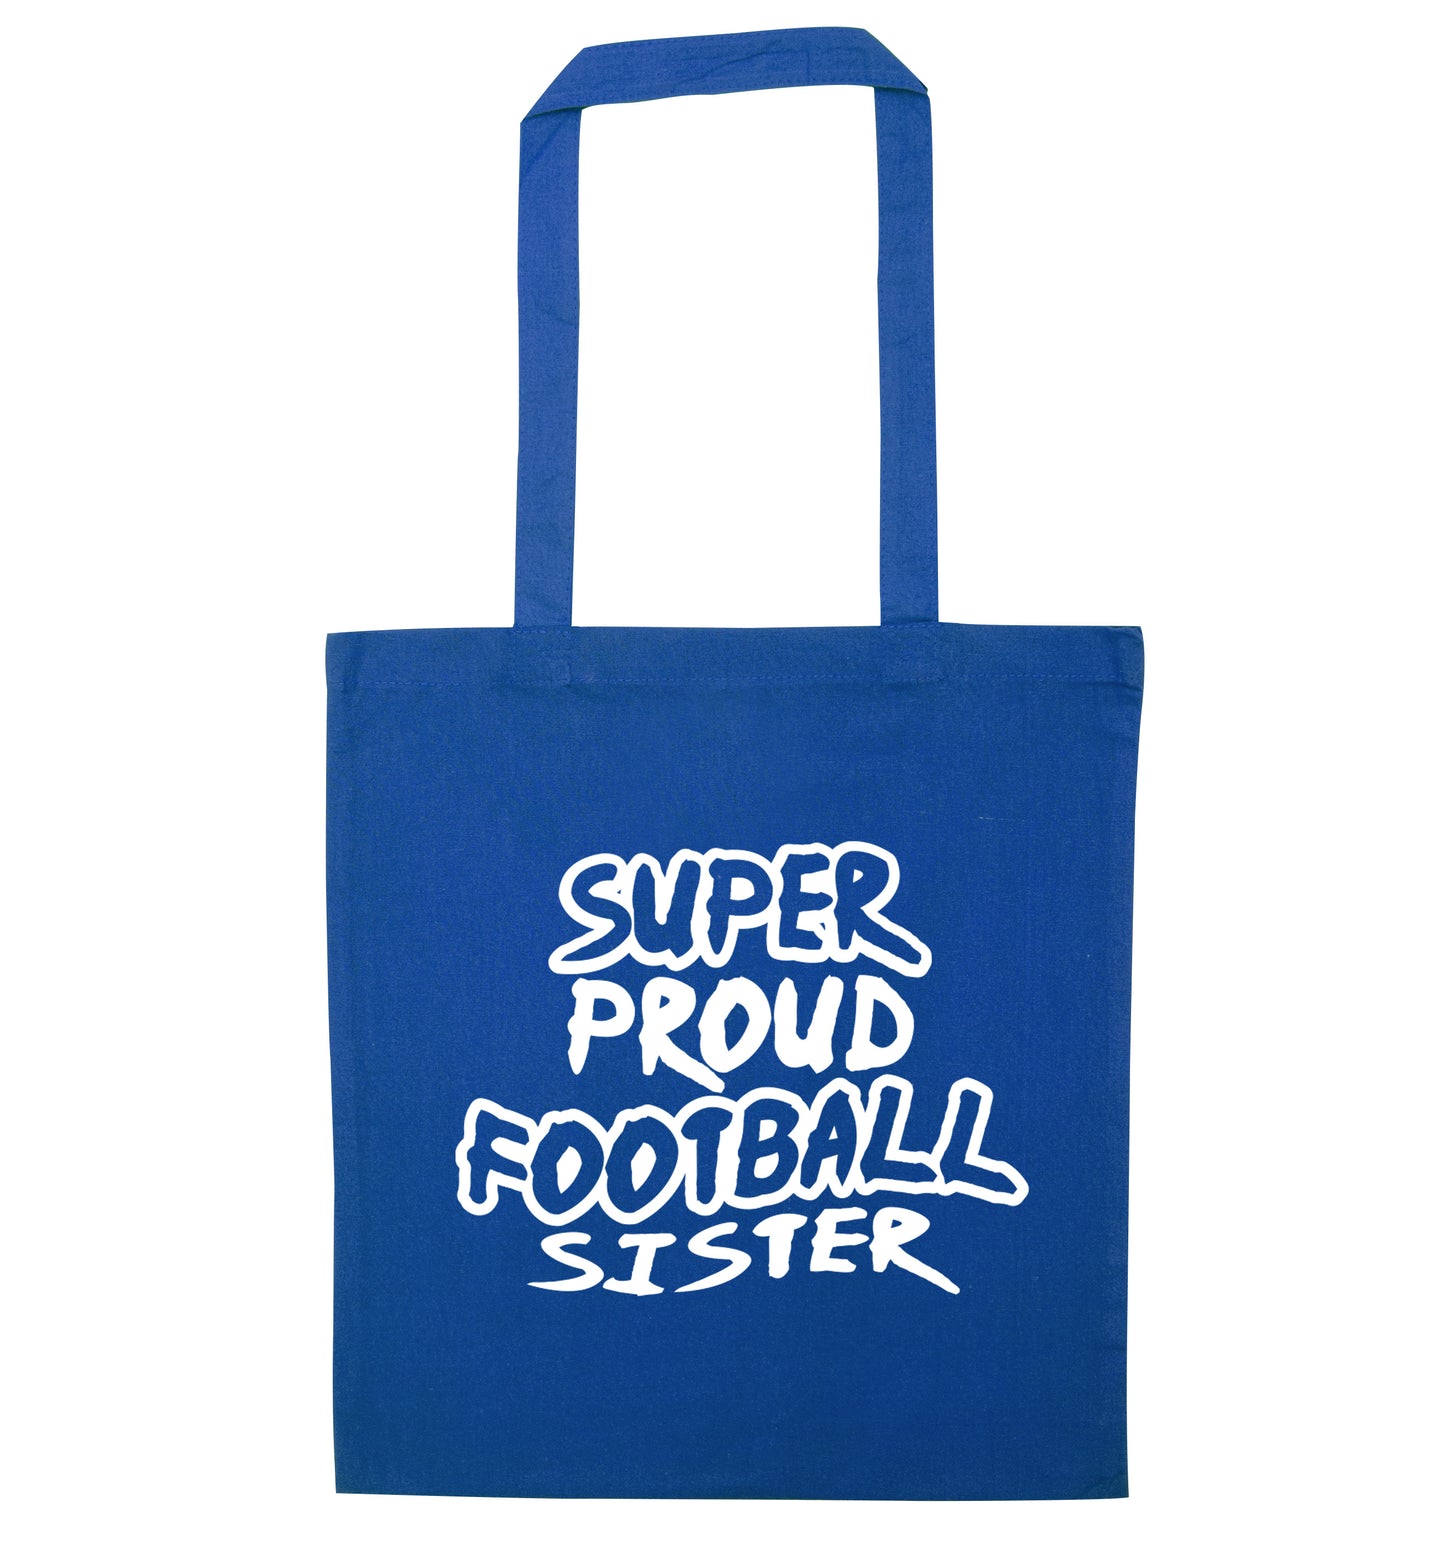 Super proud football sister blue tote bag